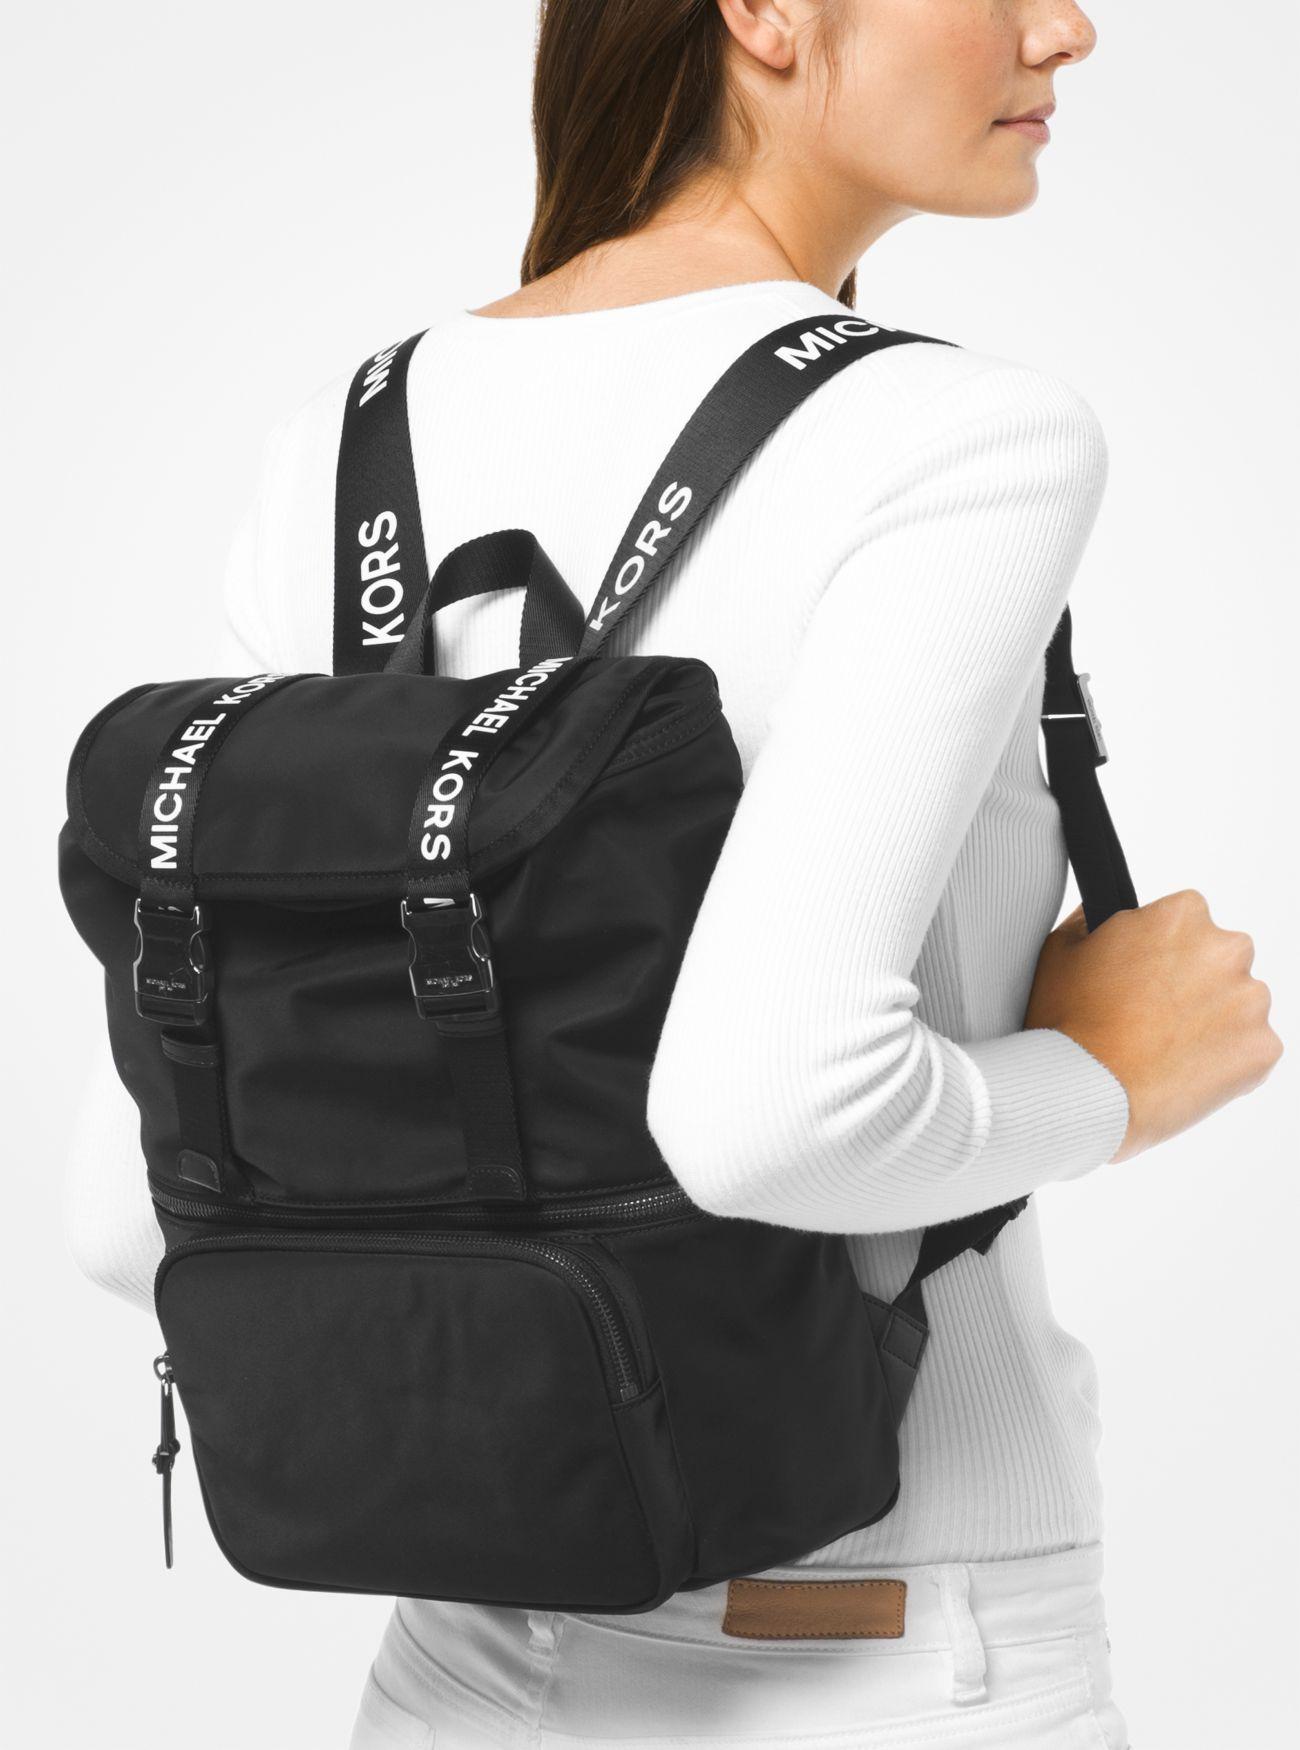 michael kors large nylon backpack